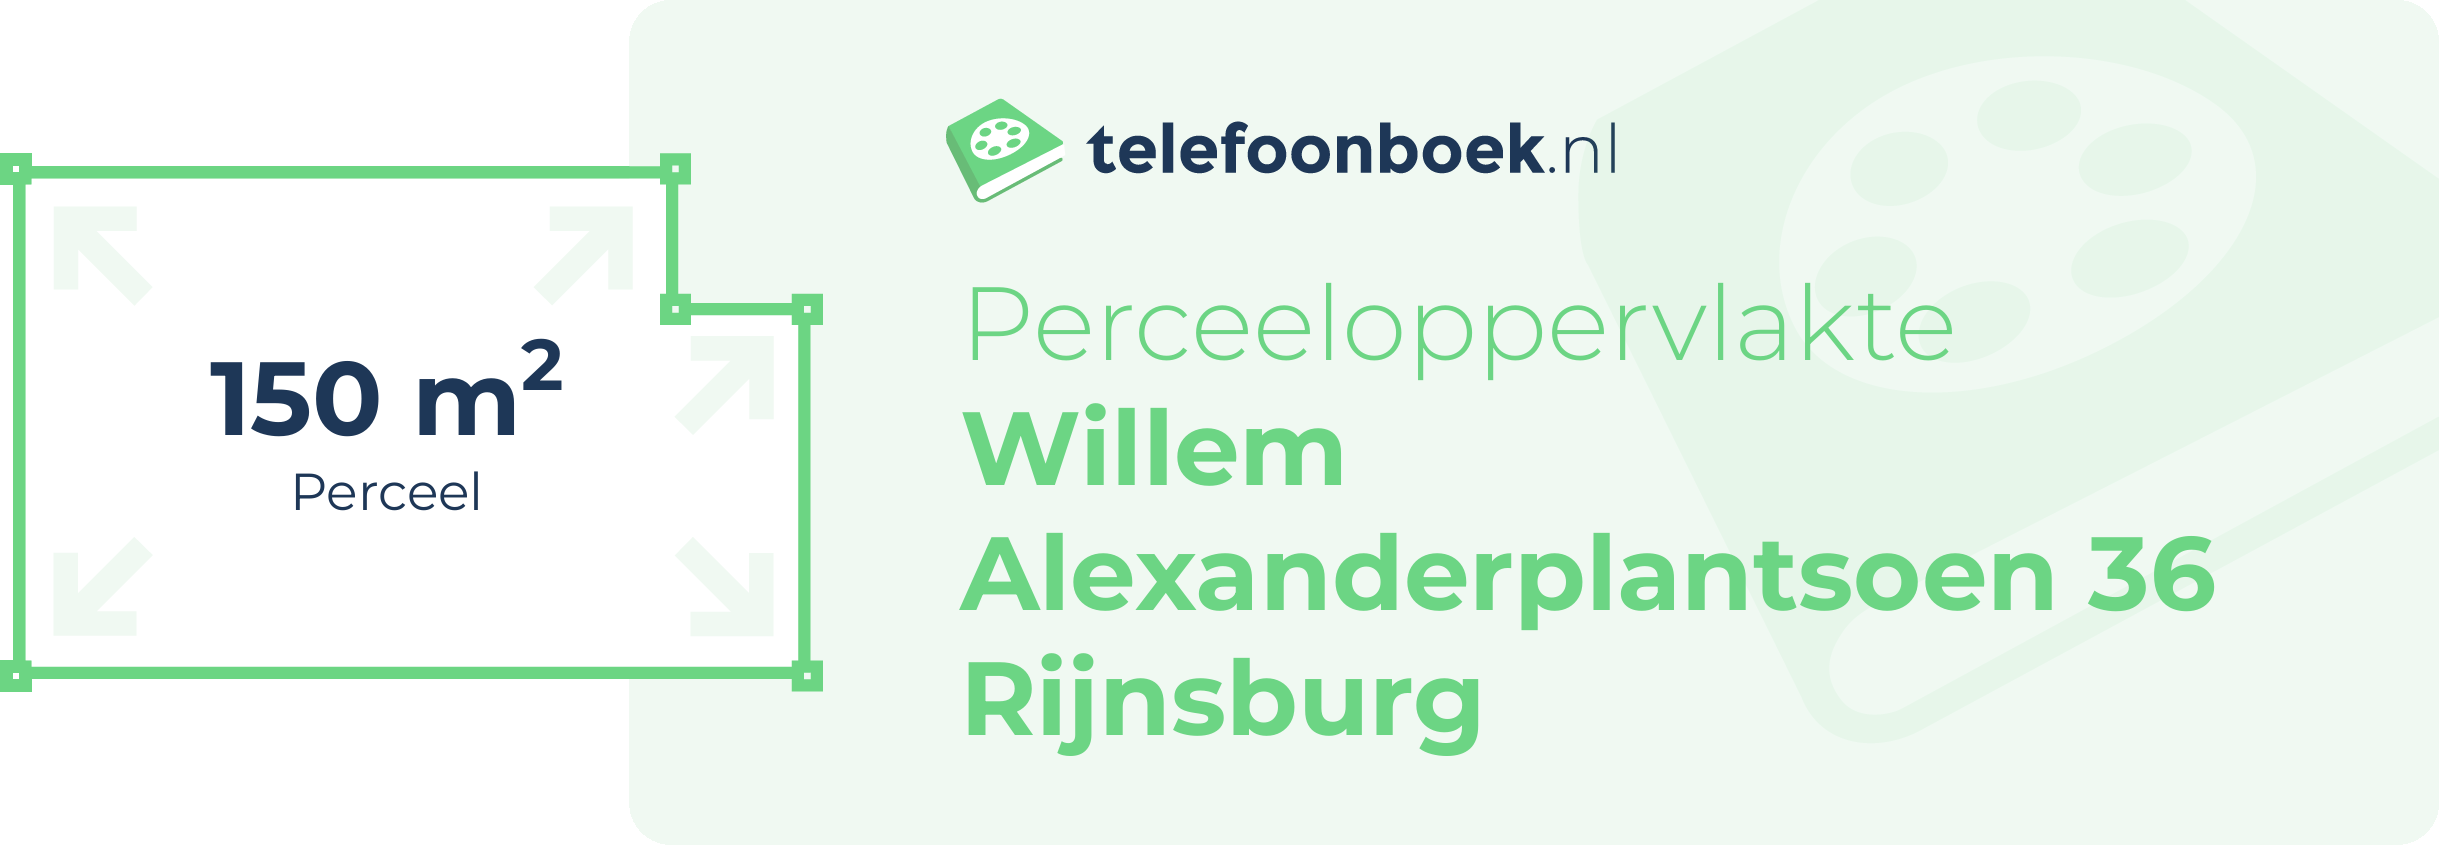 Perceeloppervlakte Willem Alexanderplantsoen 36 Rijnsburg